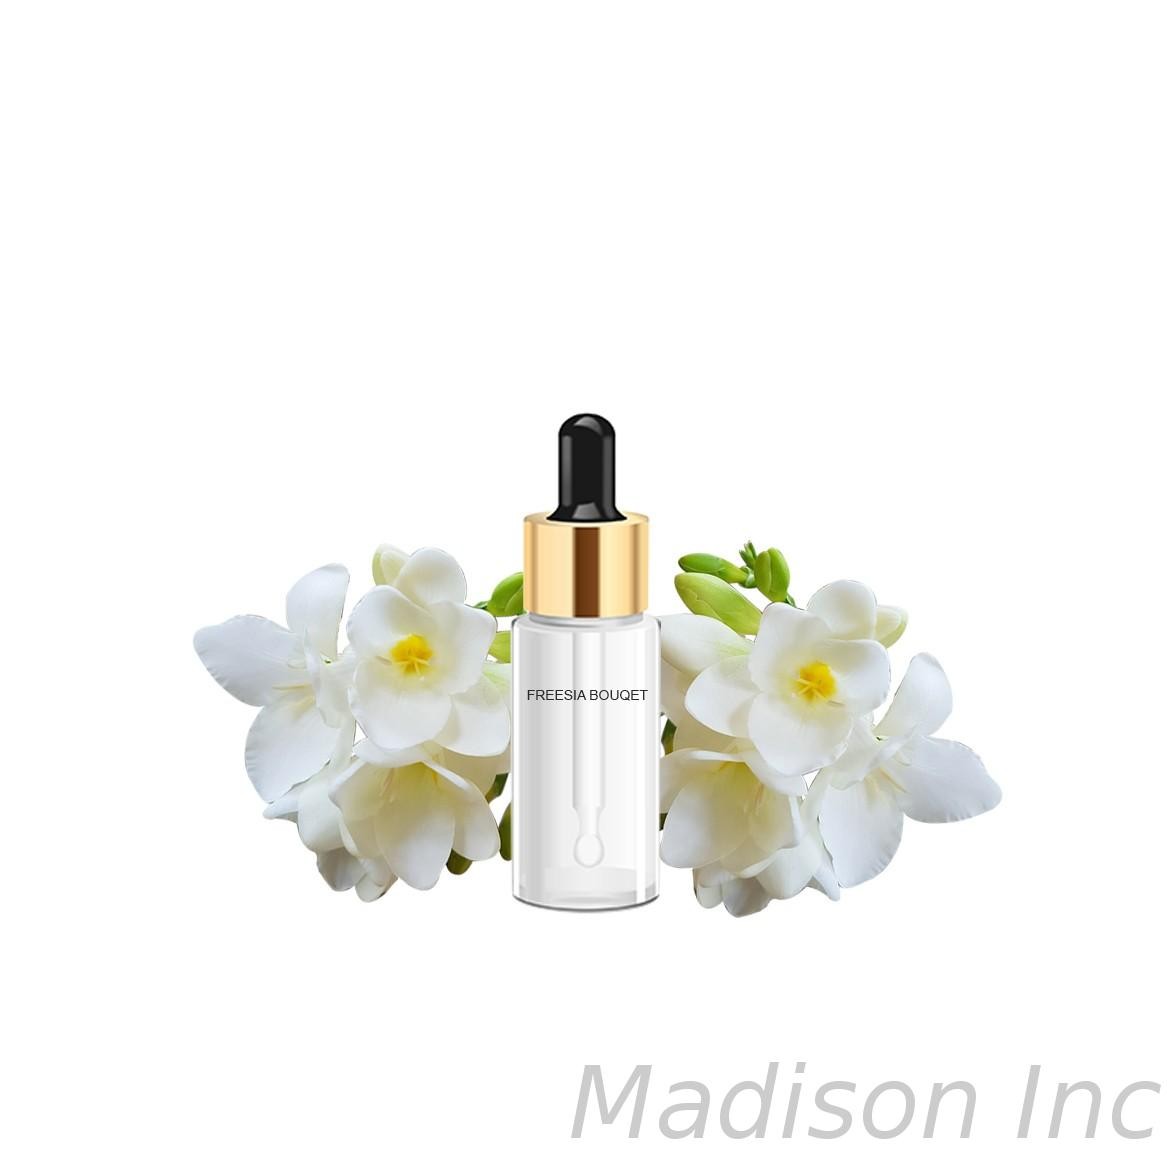 Blissfully Scent Garden natural ingredient blended brand own perfume gift scent